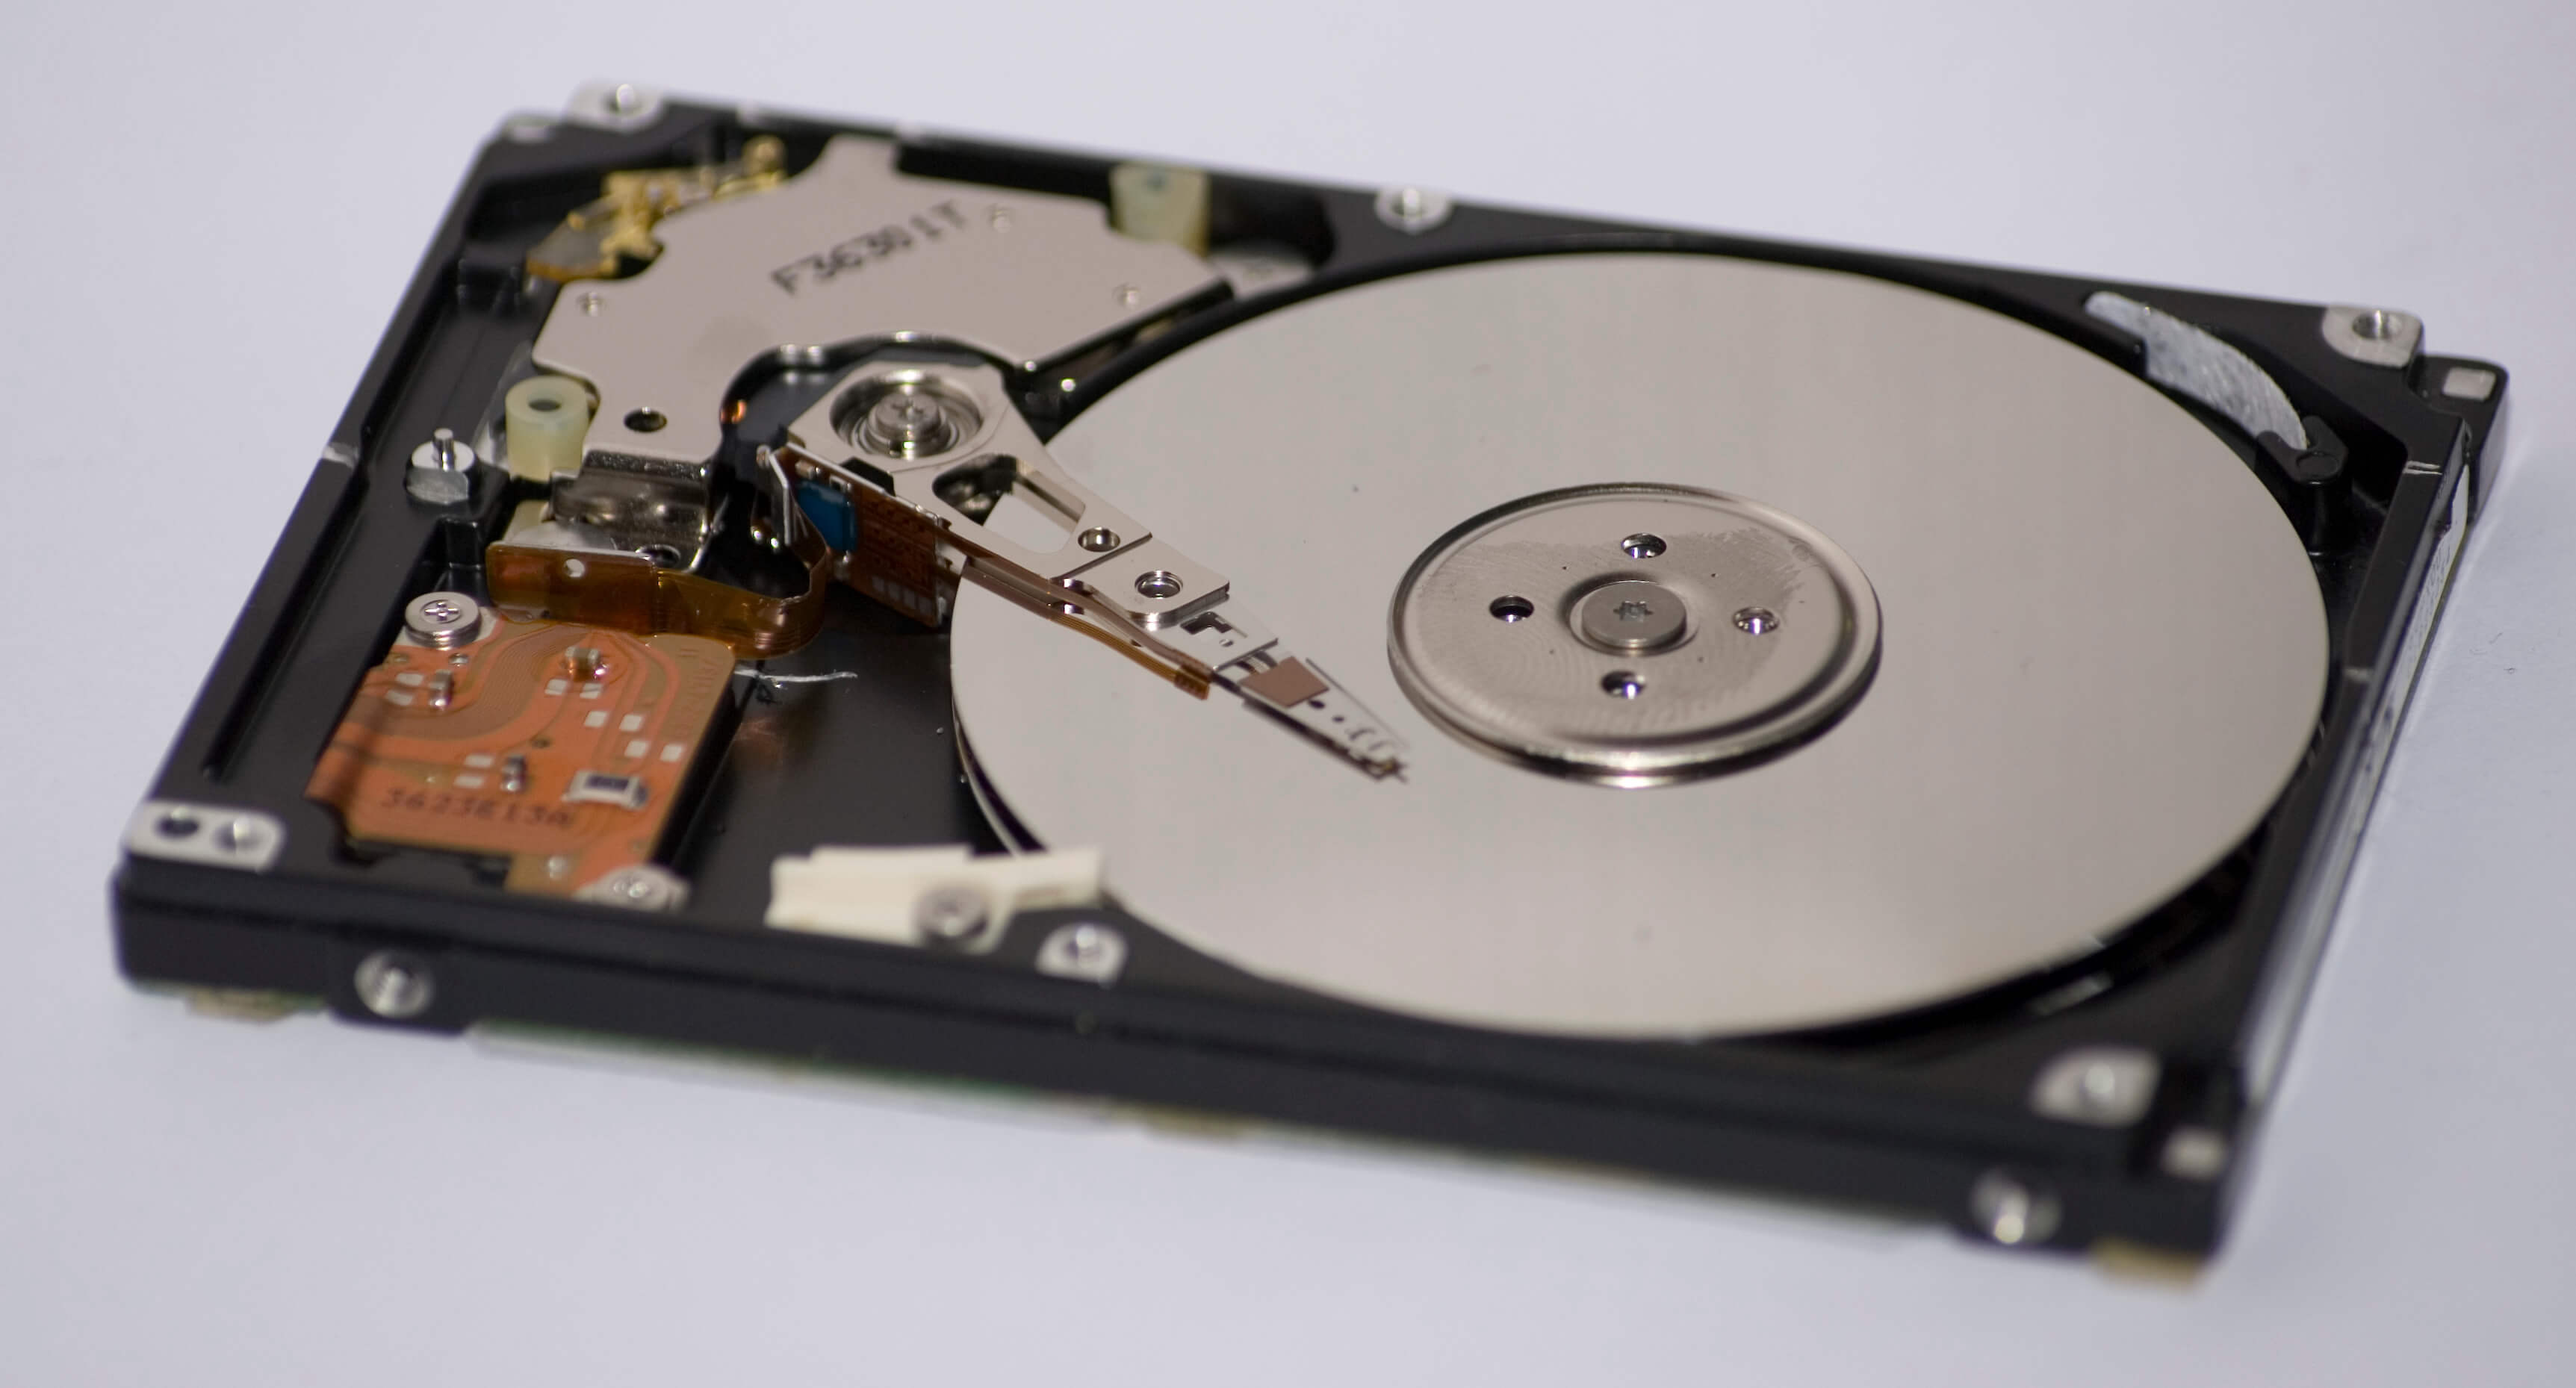 The future is near: 80 TBytes hard drives